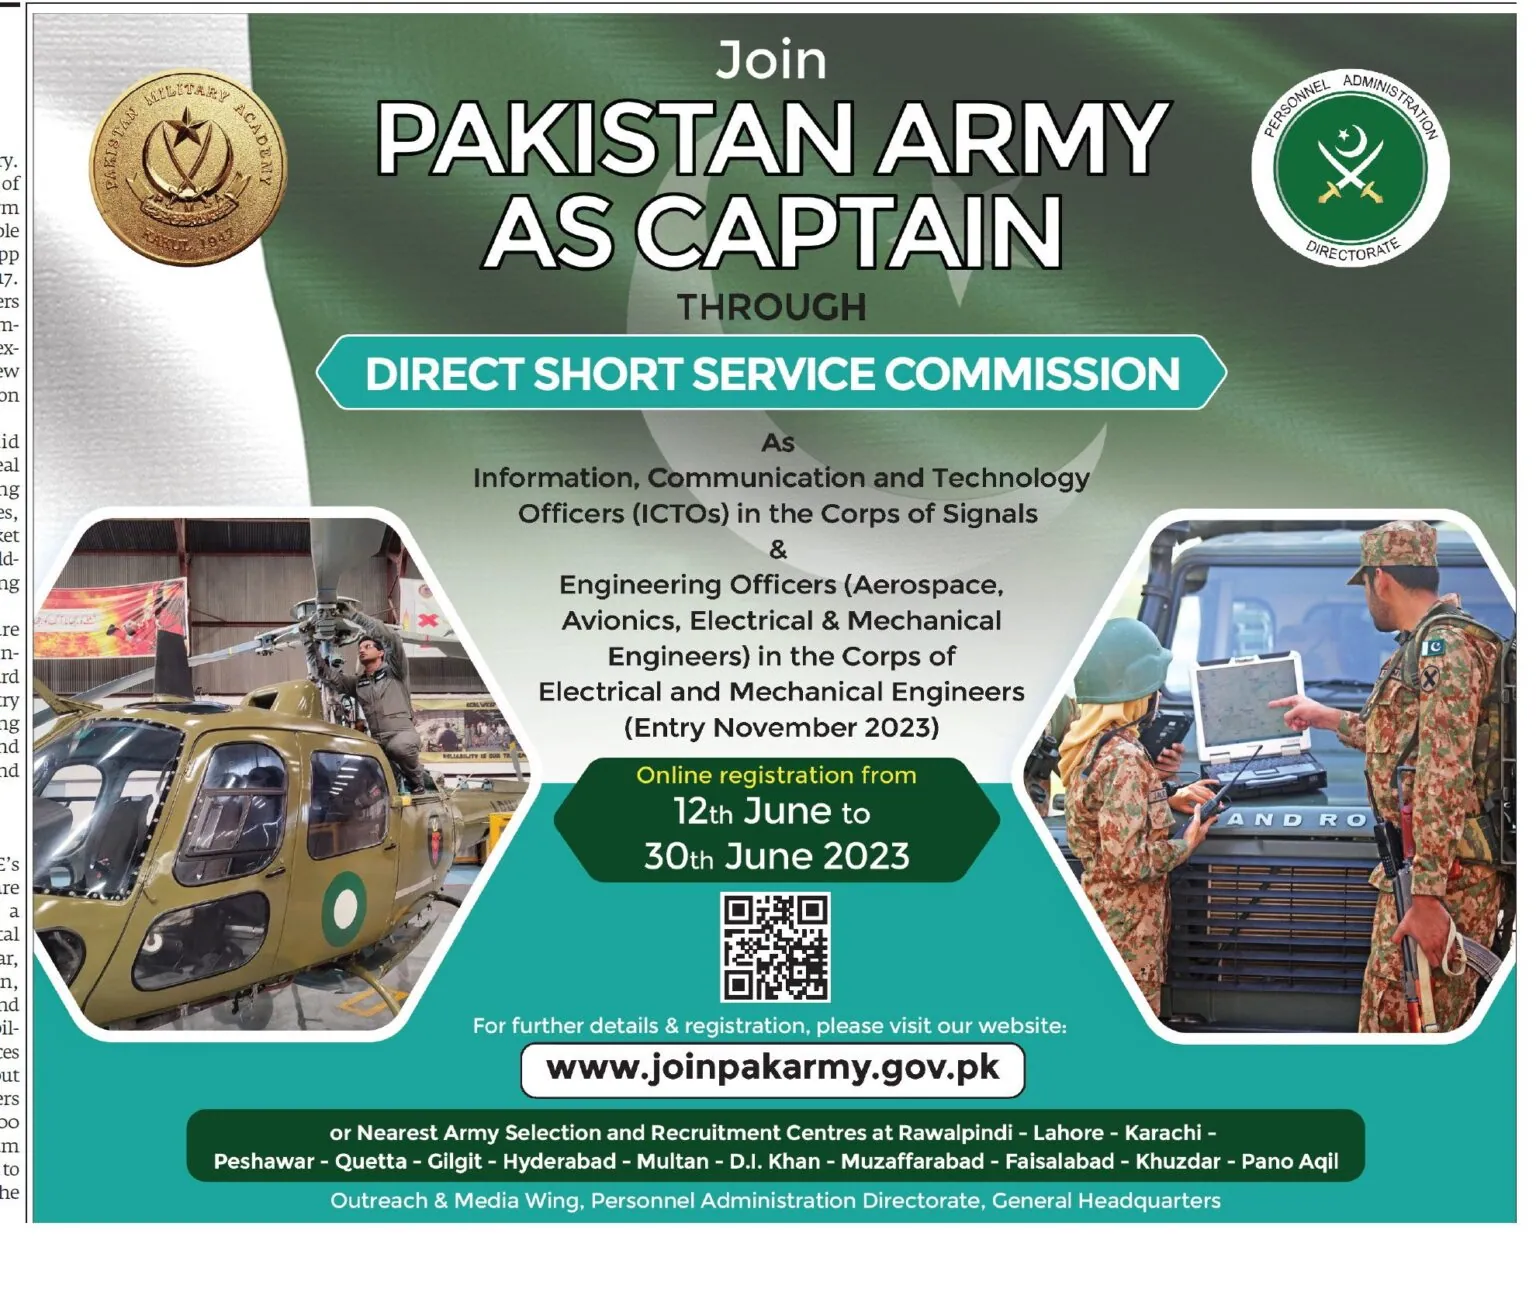 Join Pak Army as Captain 2023 - www.joinpakarmy.gov.pk 2023